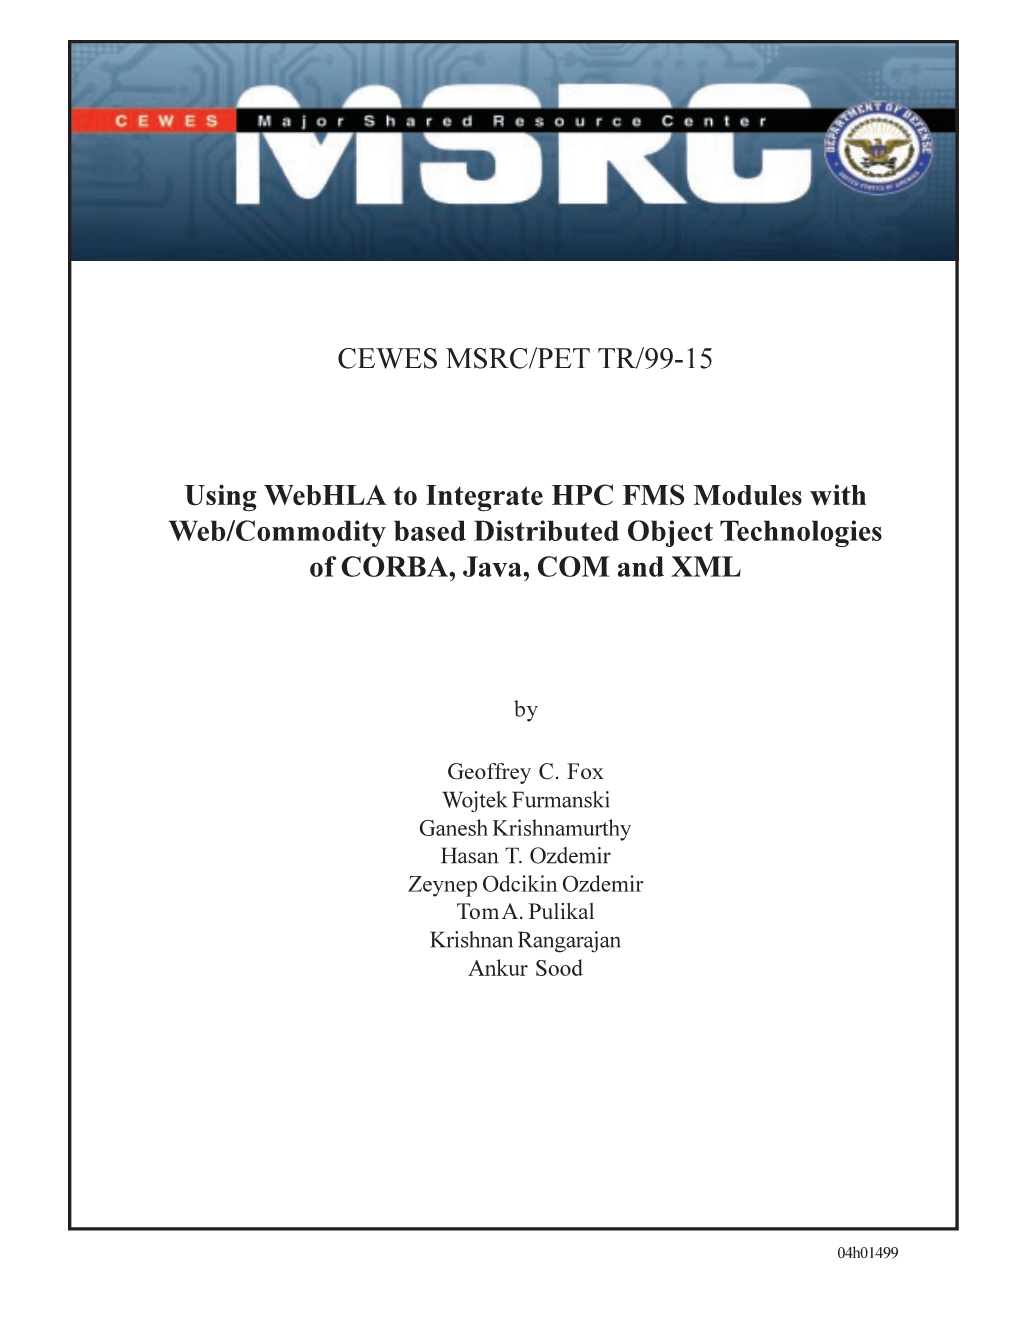 CEWES MSRC/PET TR/99-15 Using Webhla to Integrate HPC FMS